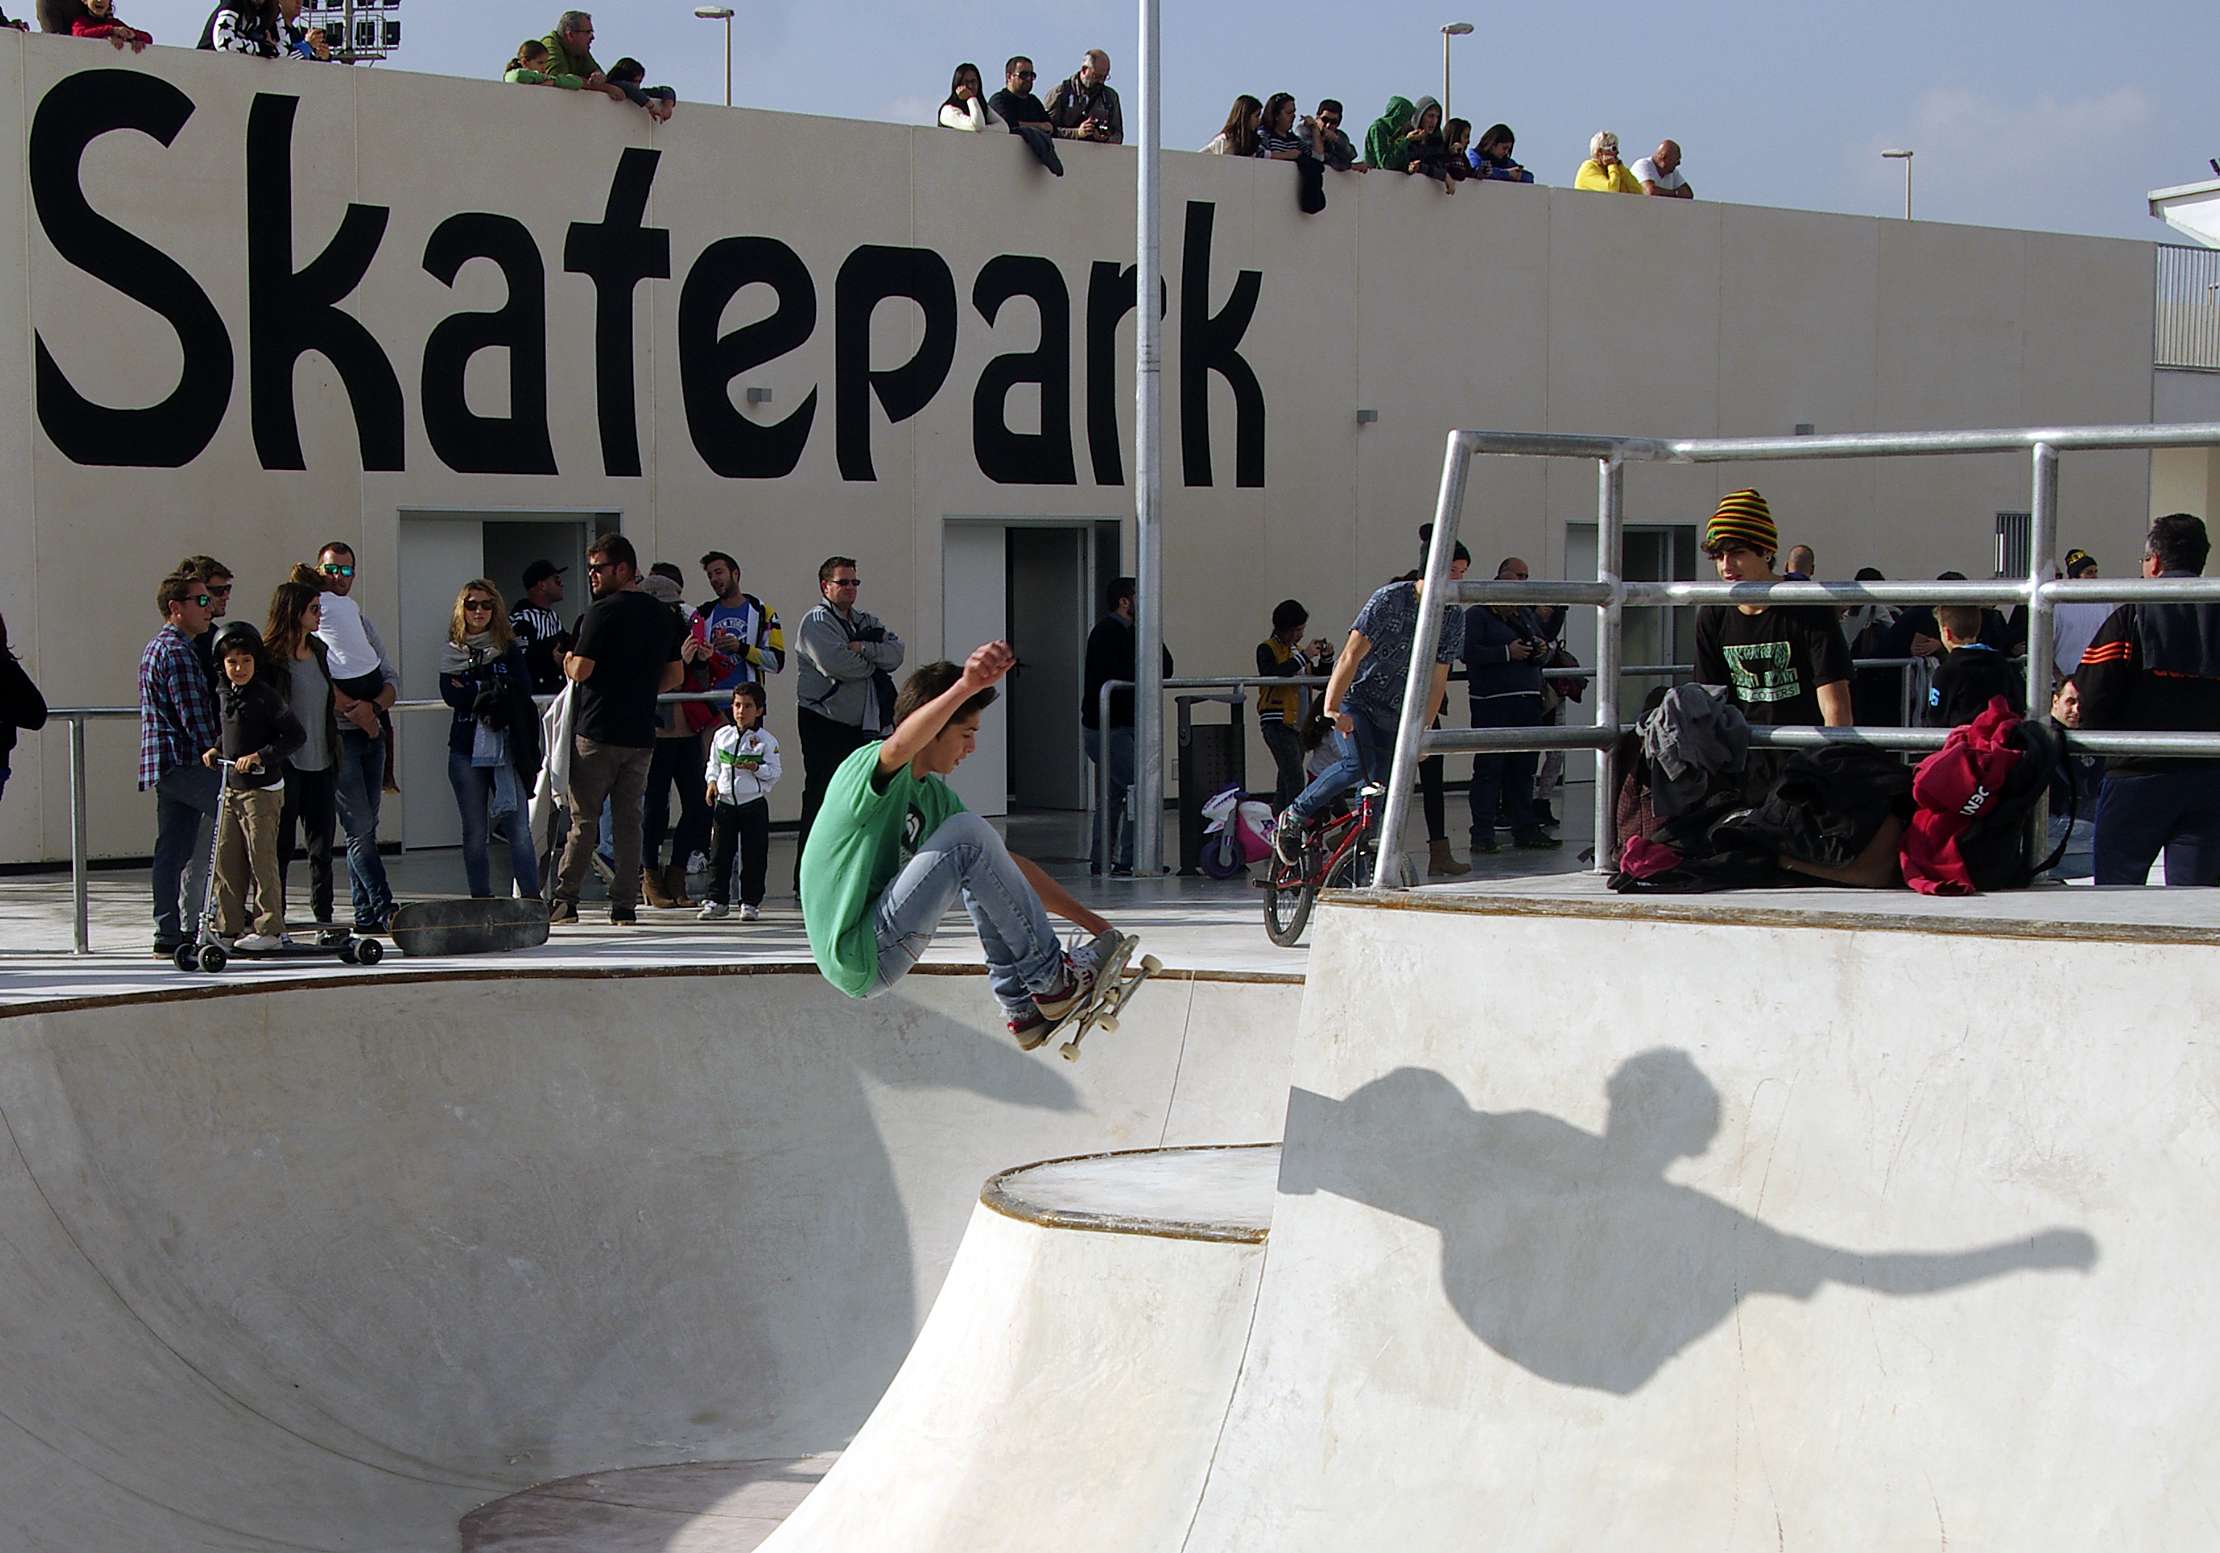 Skatepark                                                        _igp3512